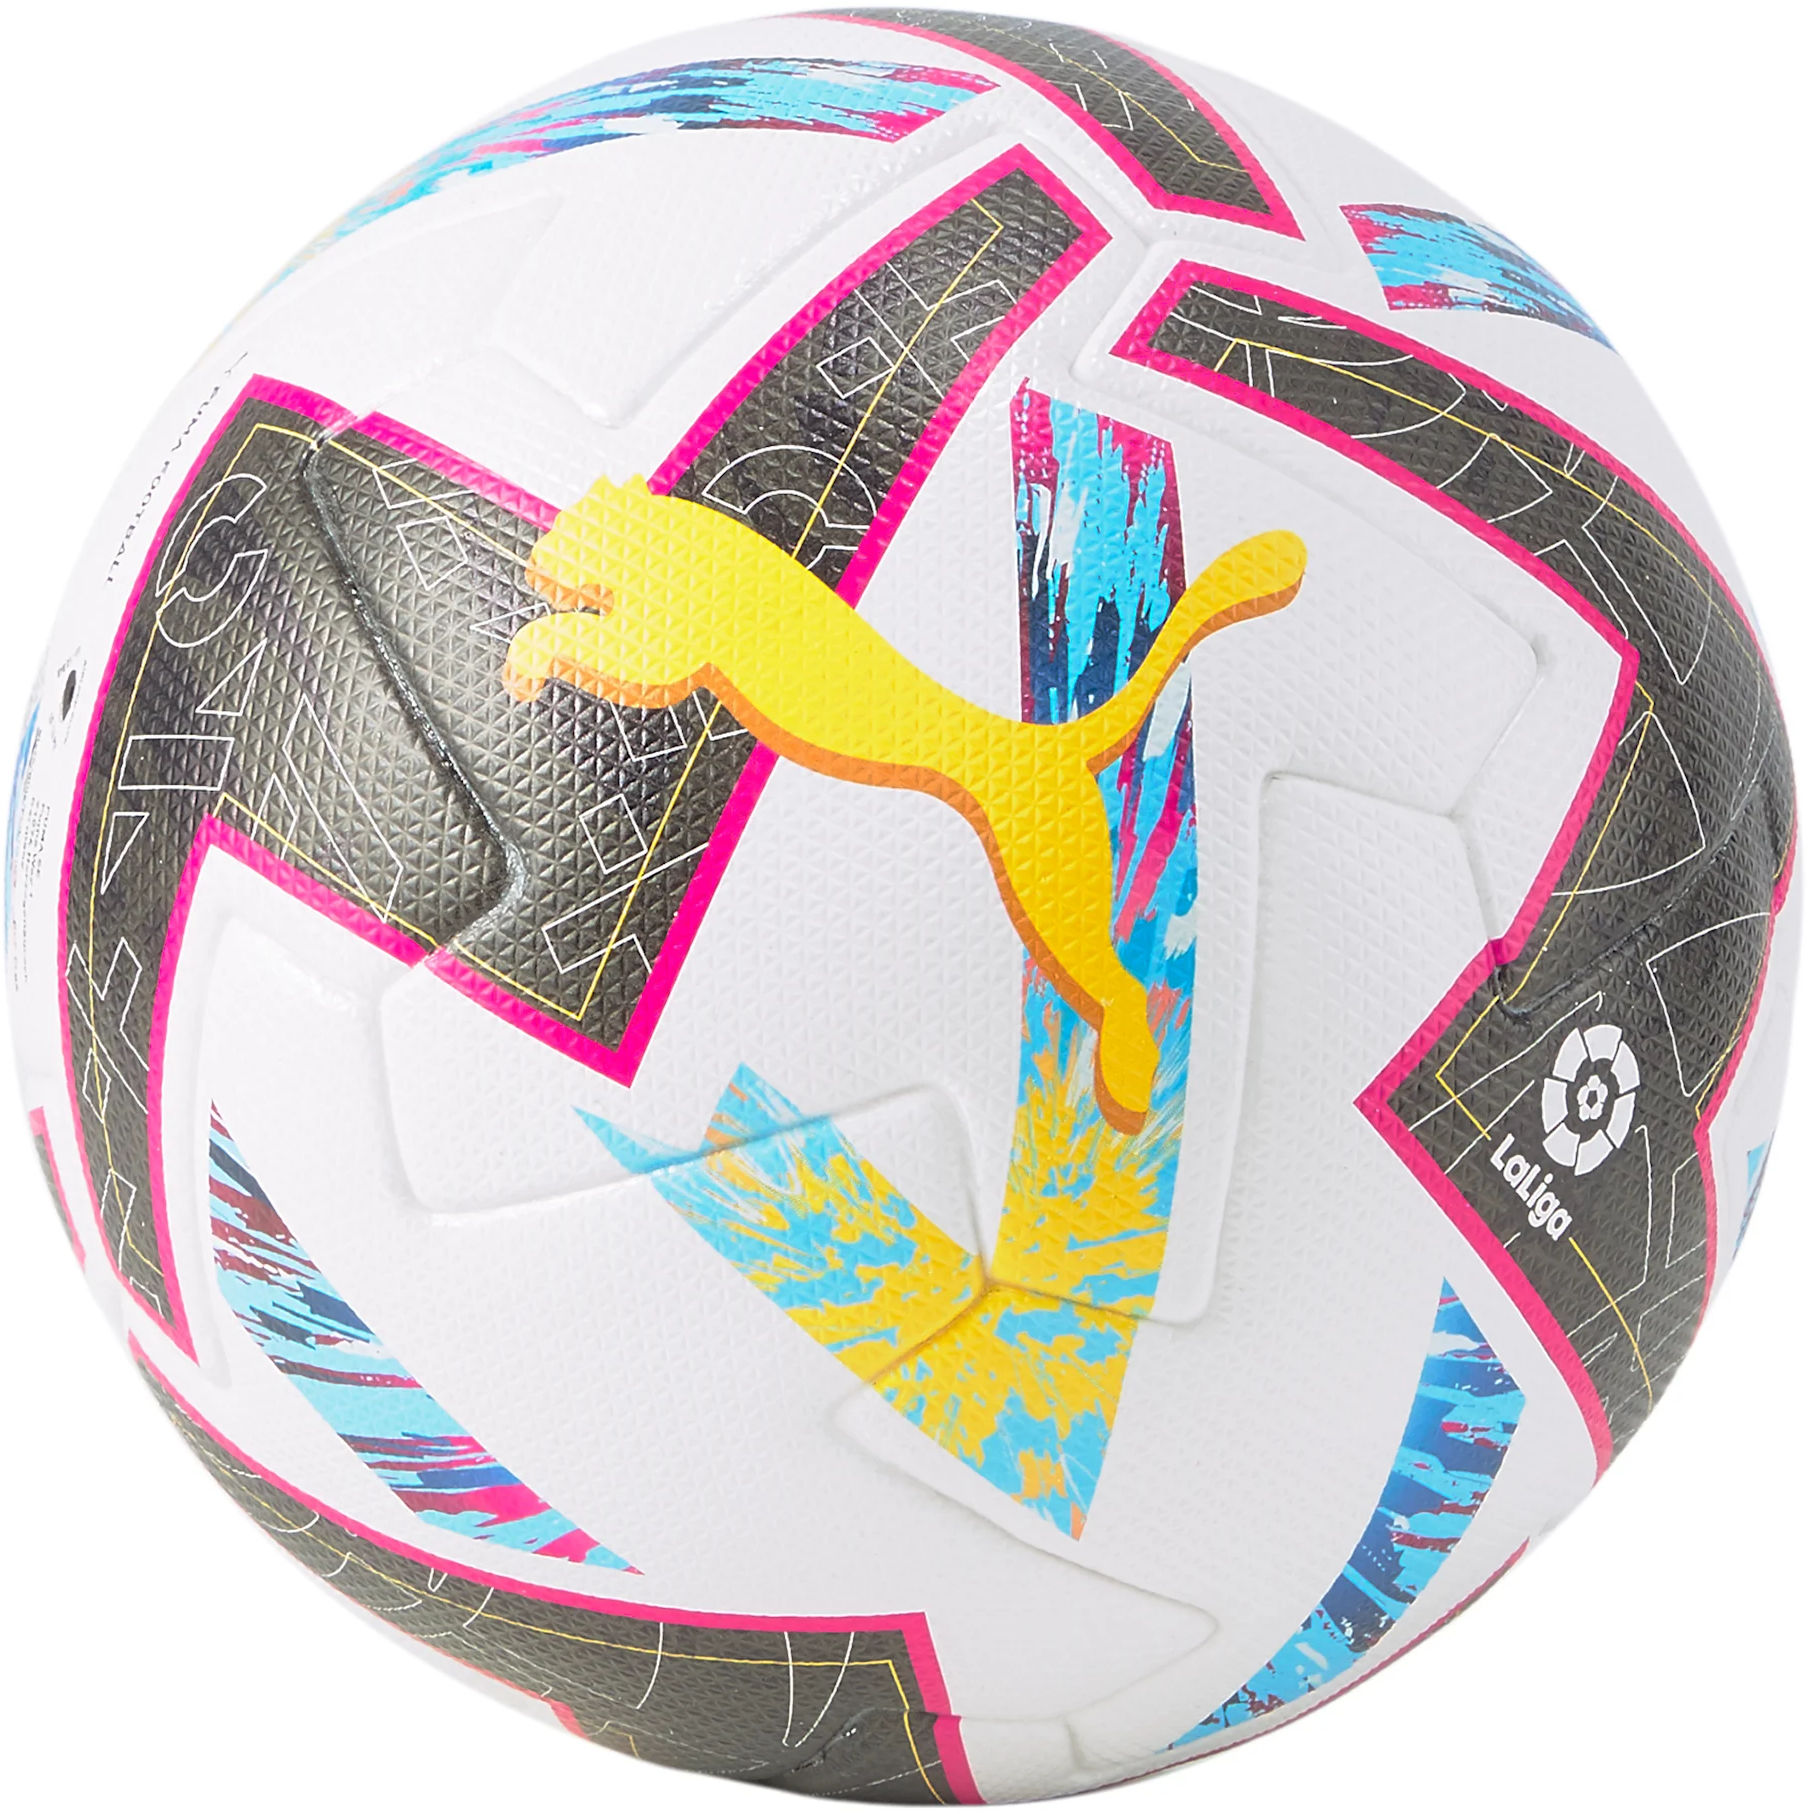 Žoga Puma Orbita LaLiga 1 (FIFA Quality Pro)